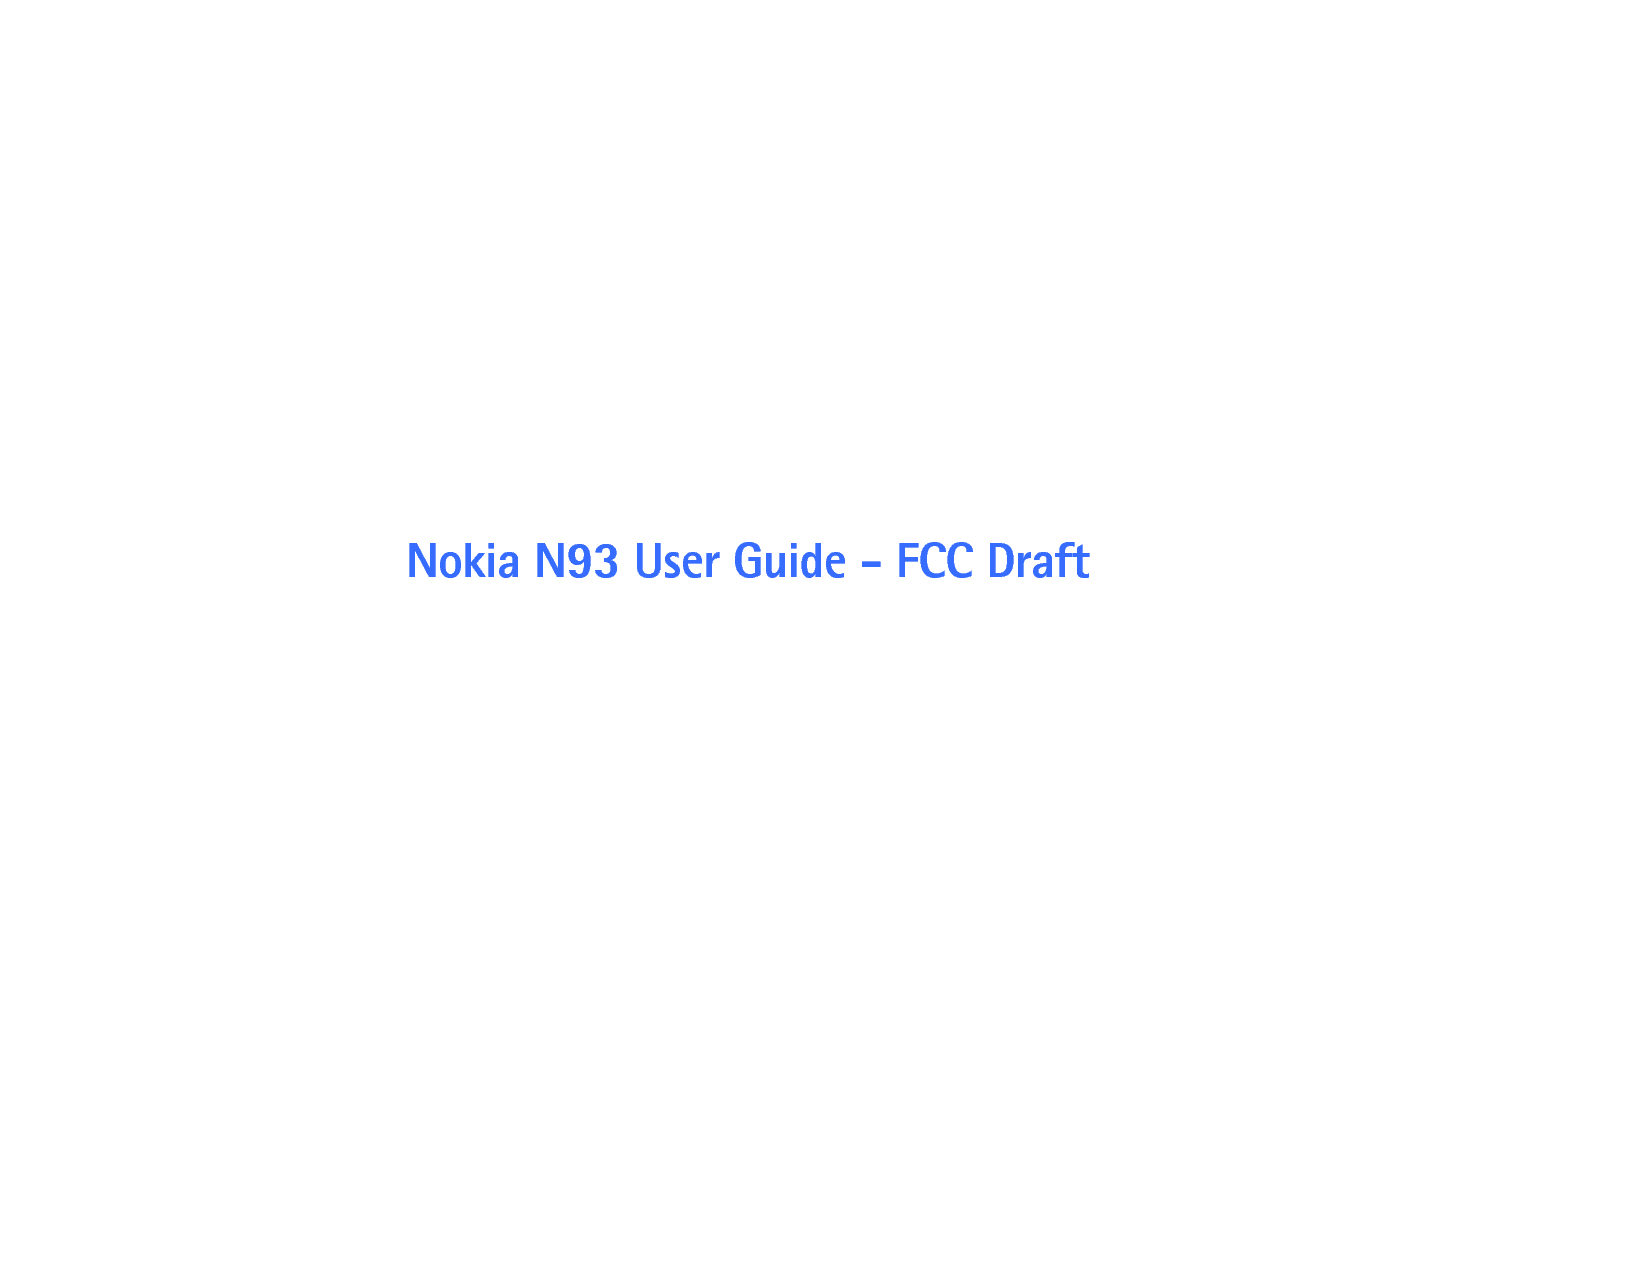 Nokia N93 User Guide - FCC Draft